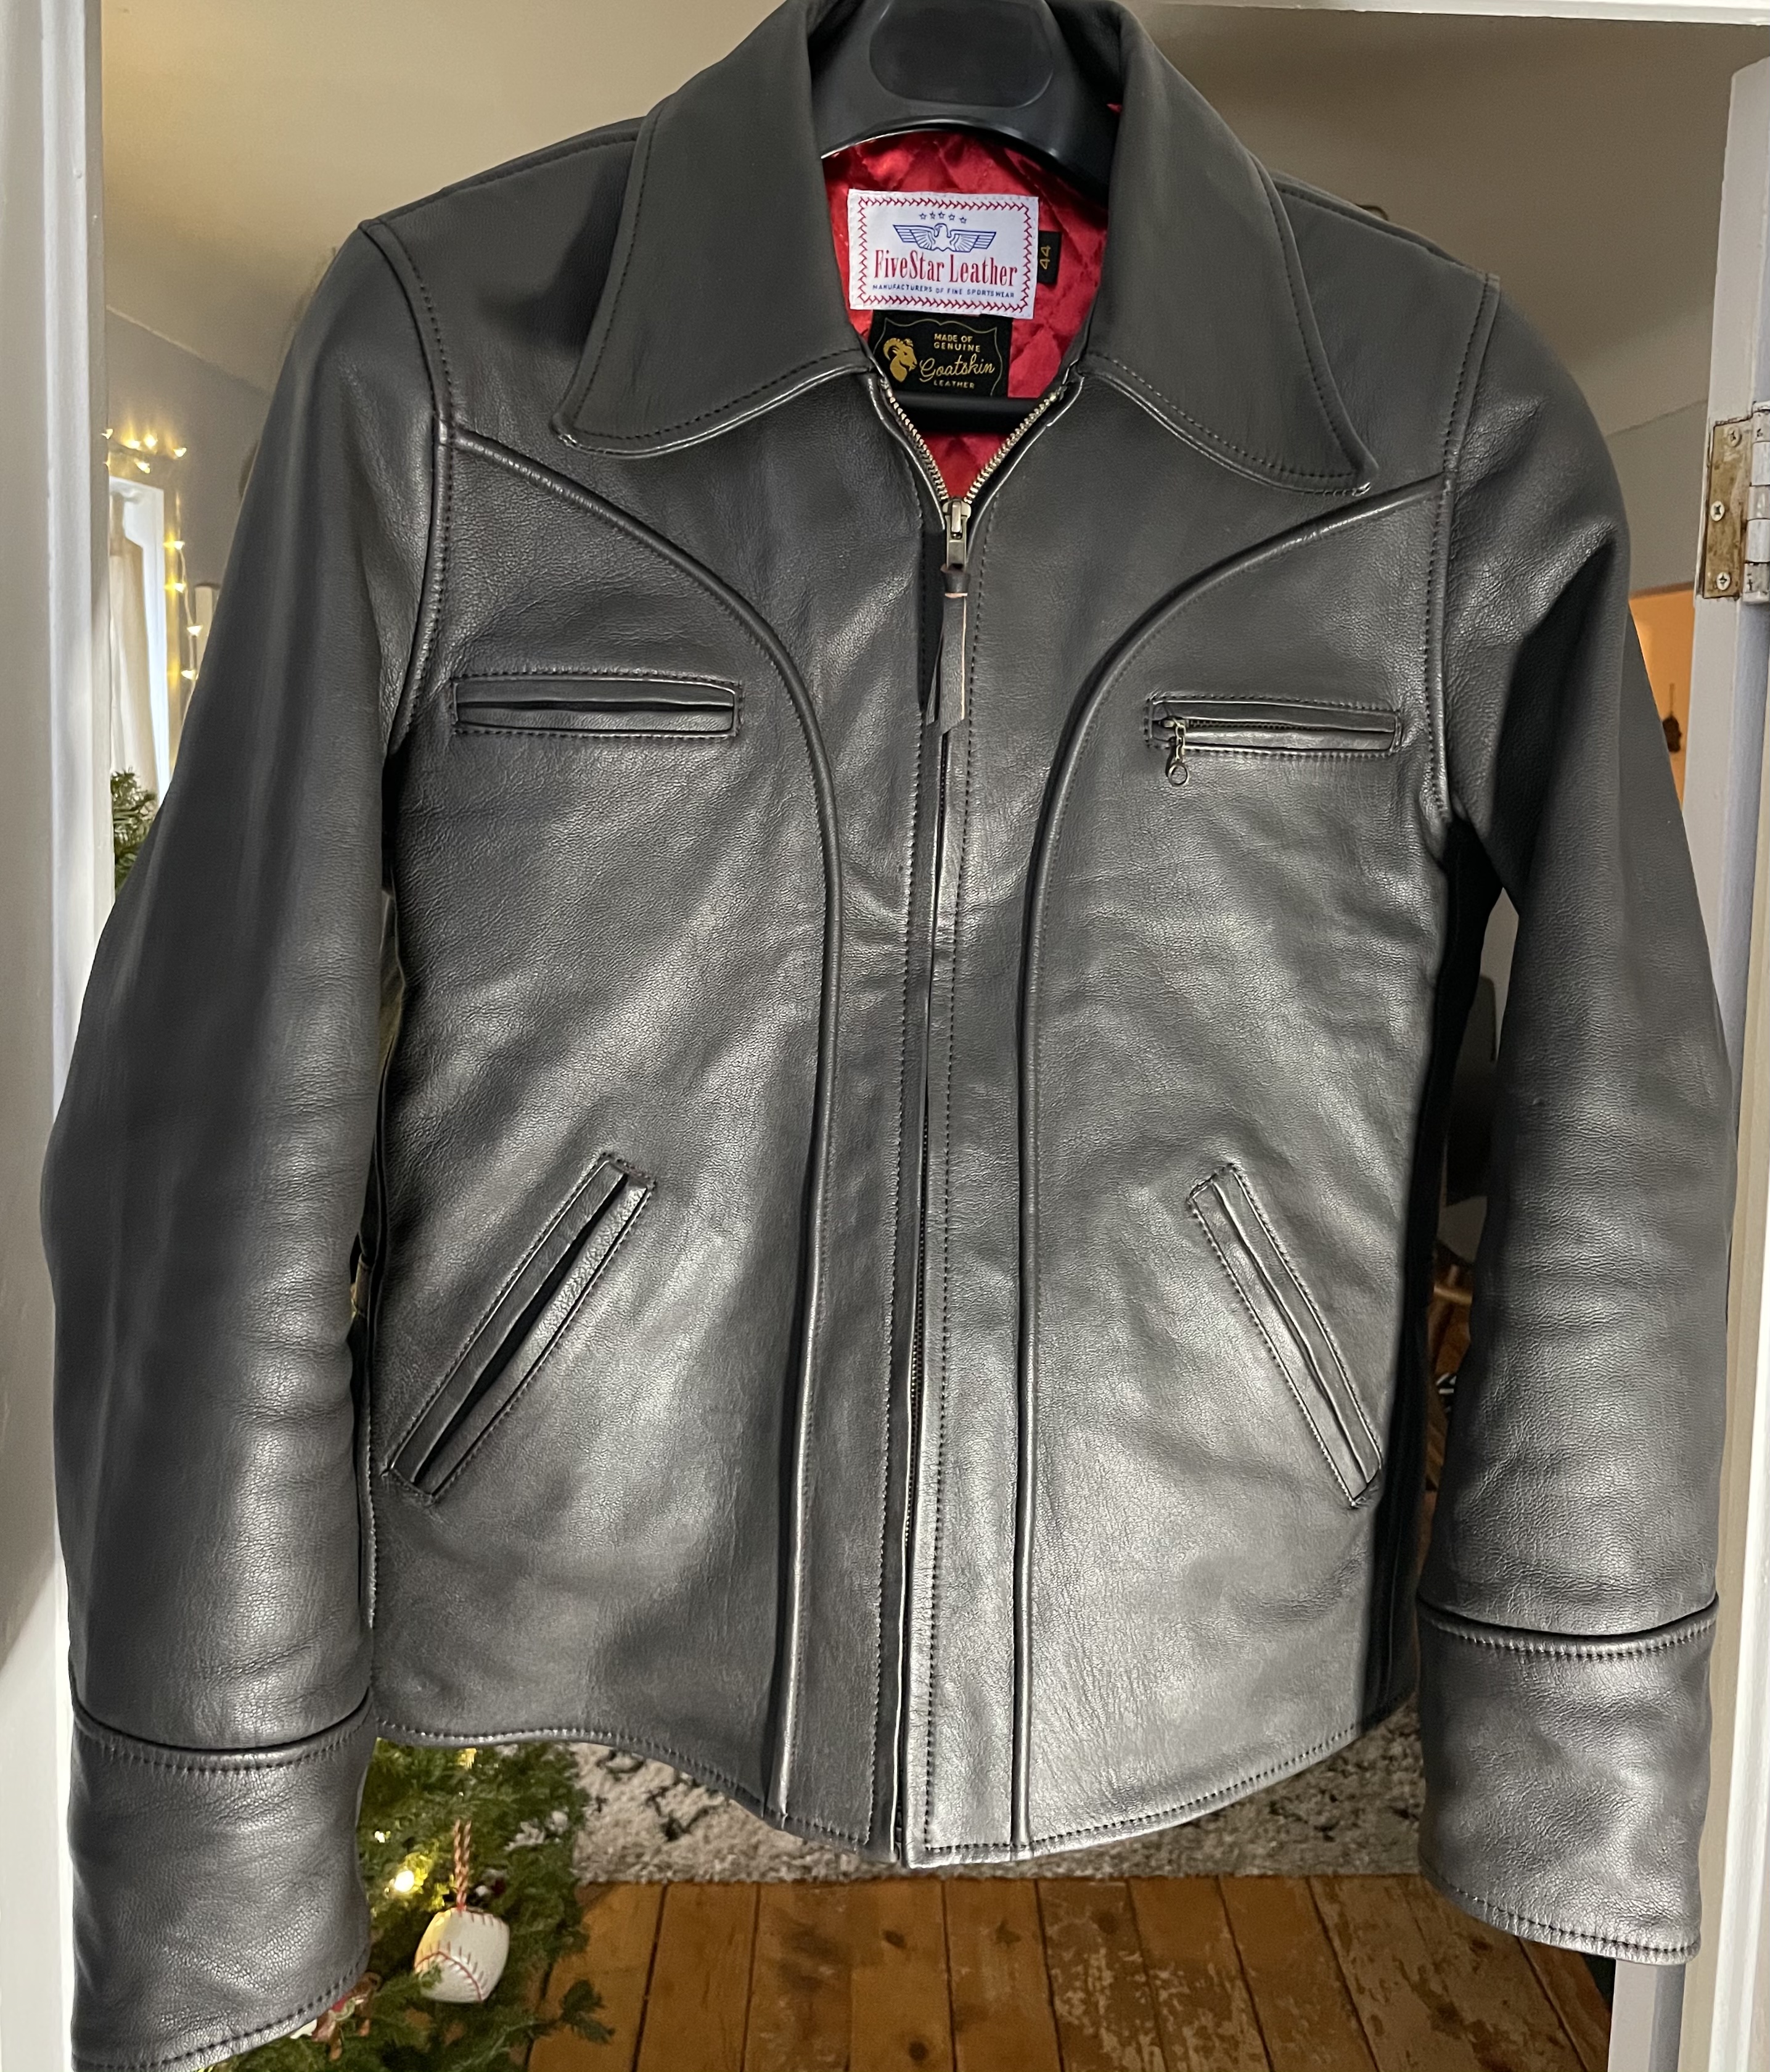 MRBLD on X: Supreme/Vanson Leather Star Jacket Fitpics